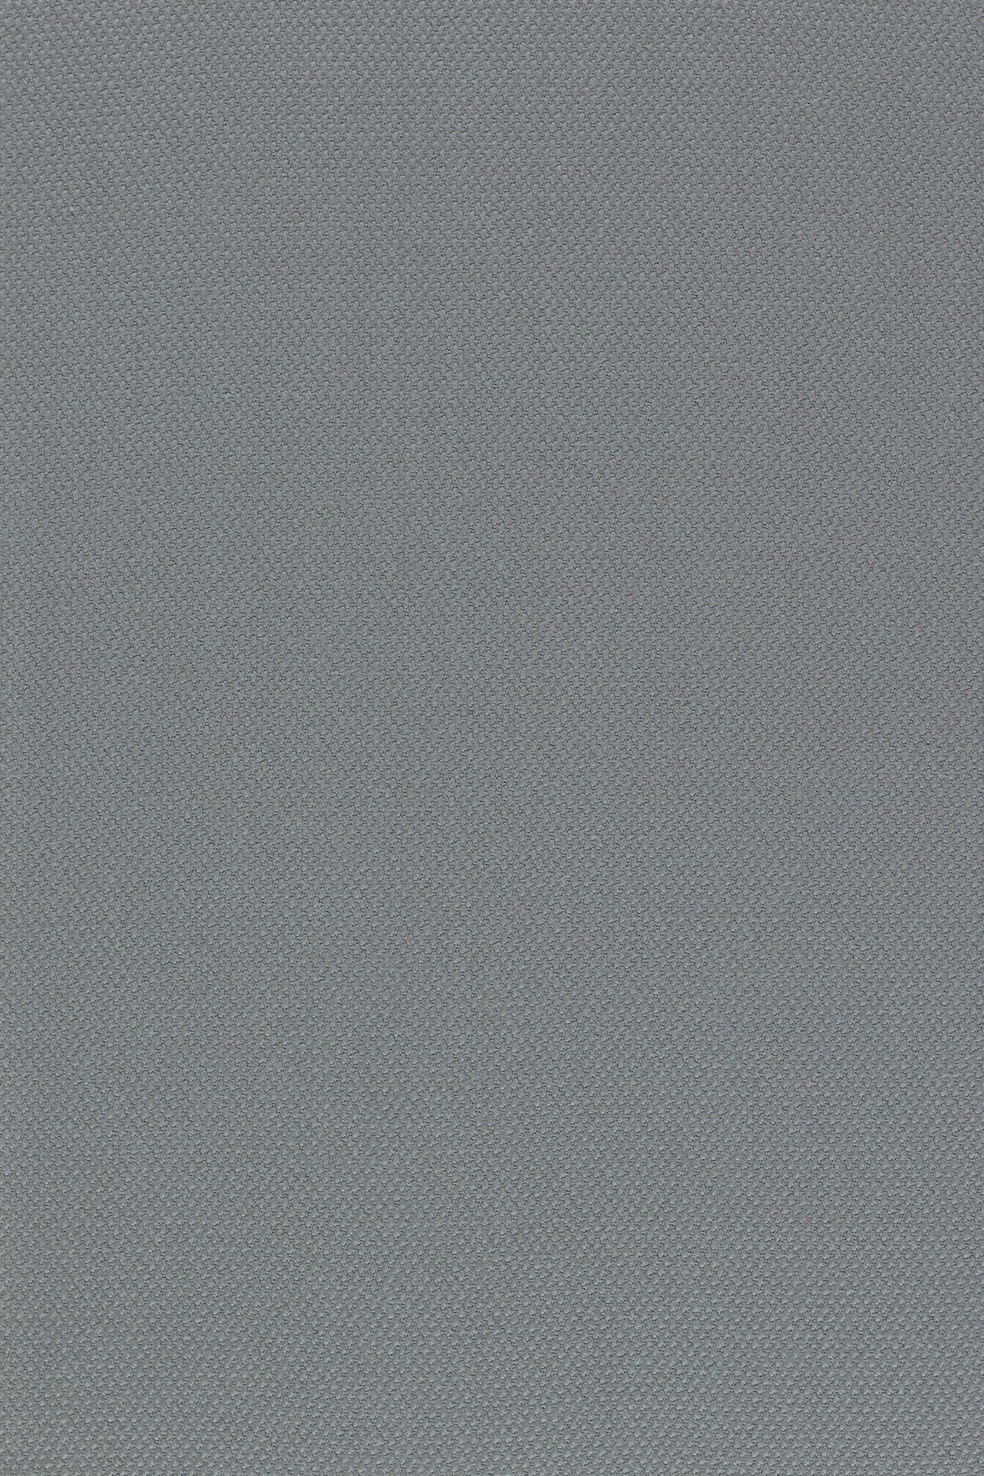 Fabric sample Steelcut 2 155 grey